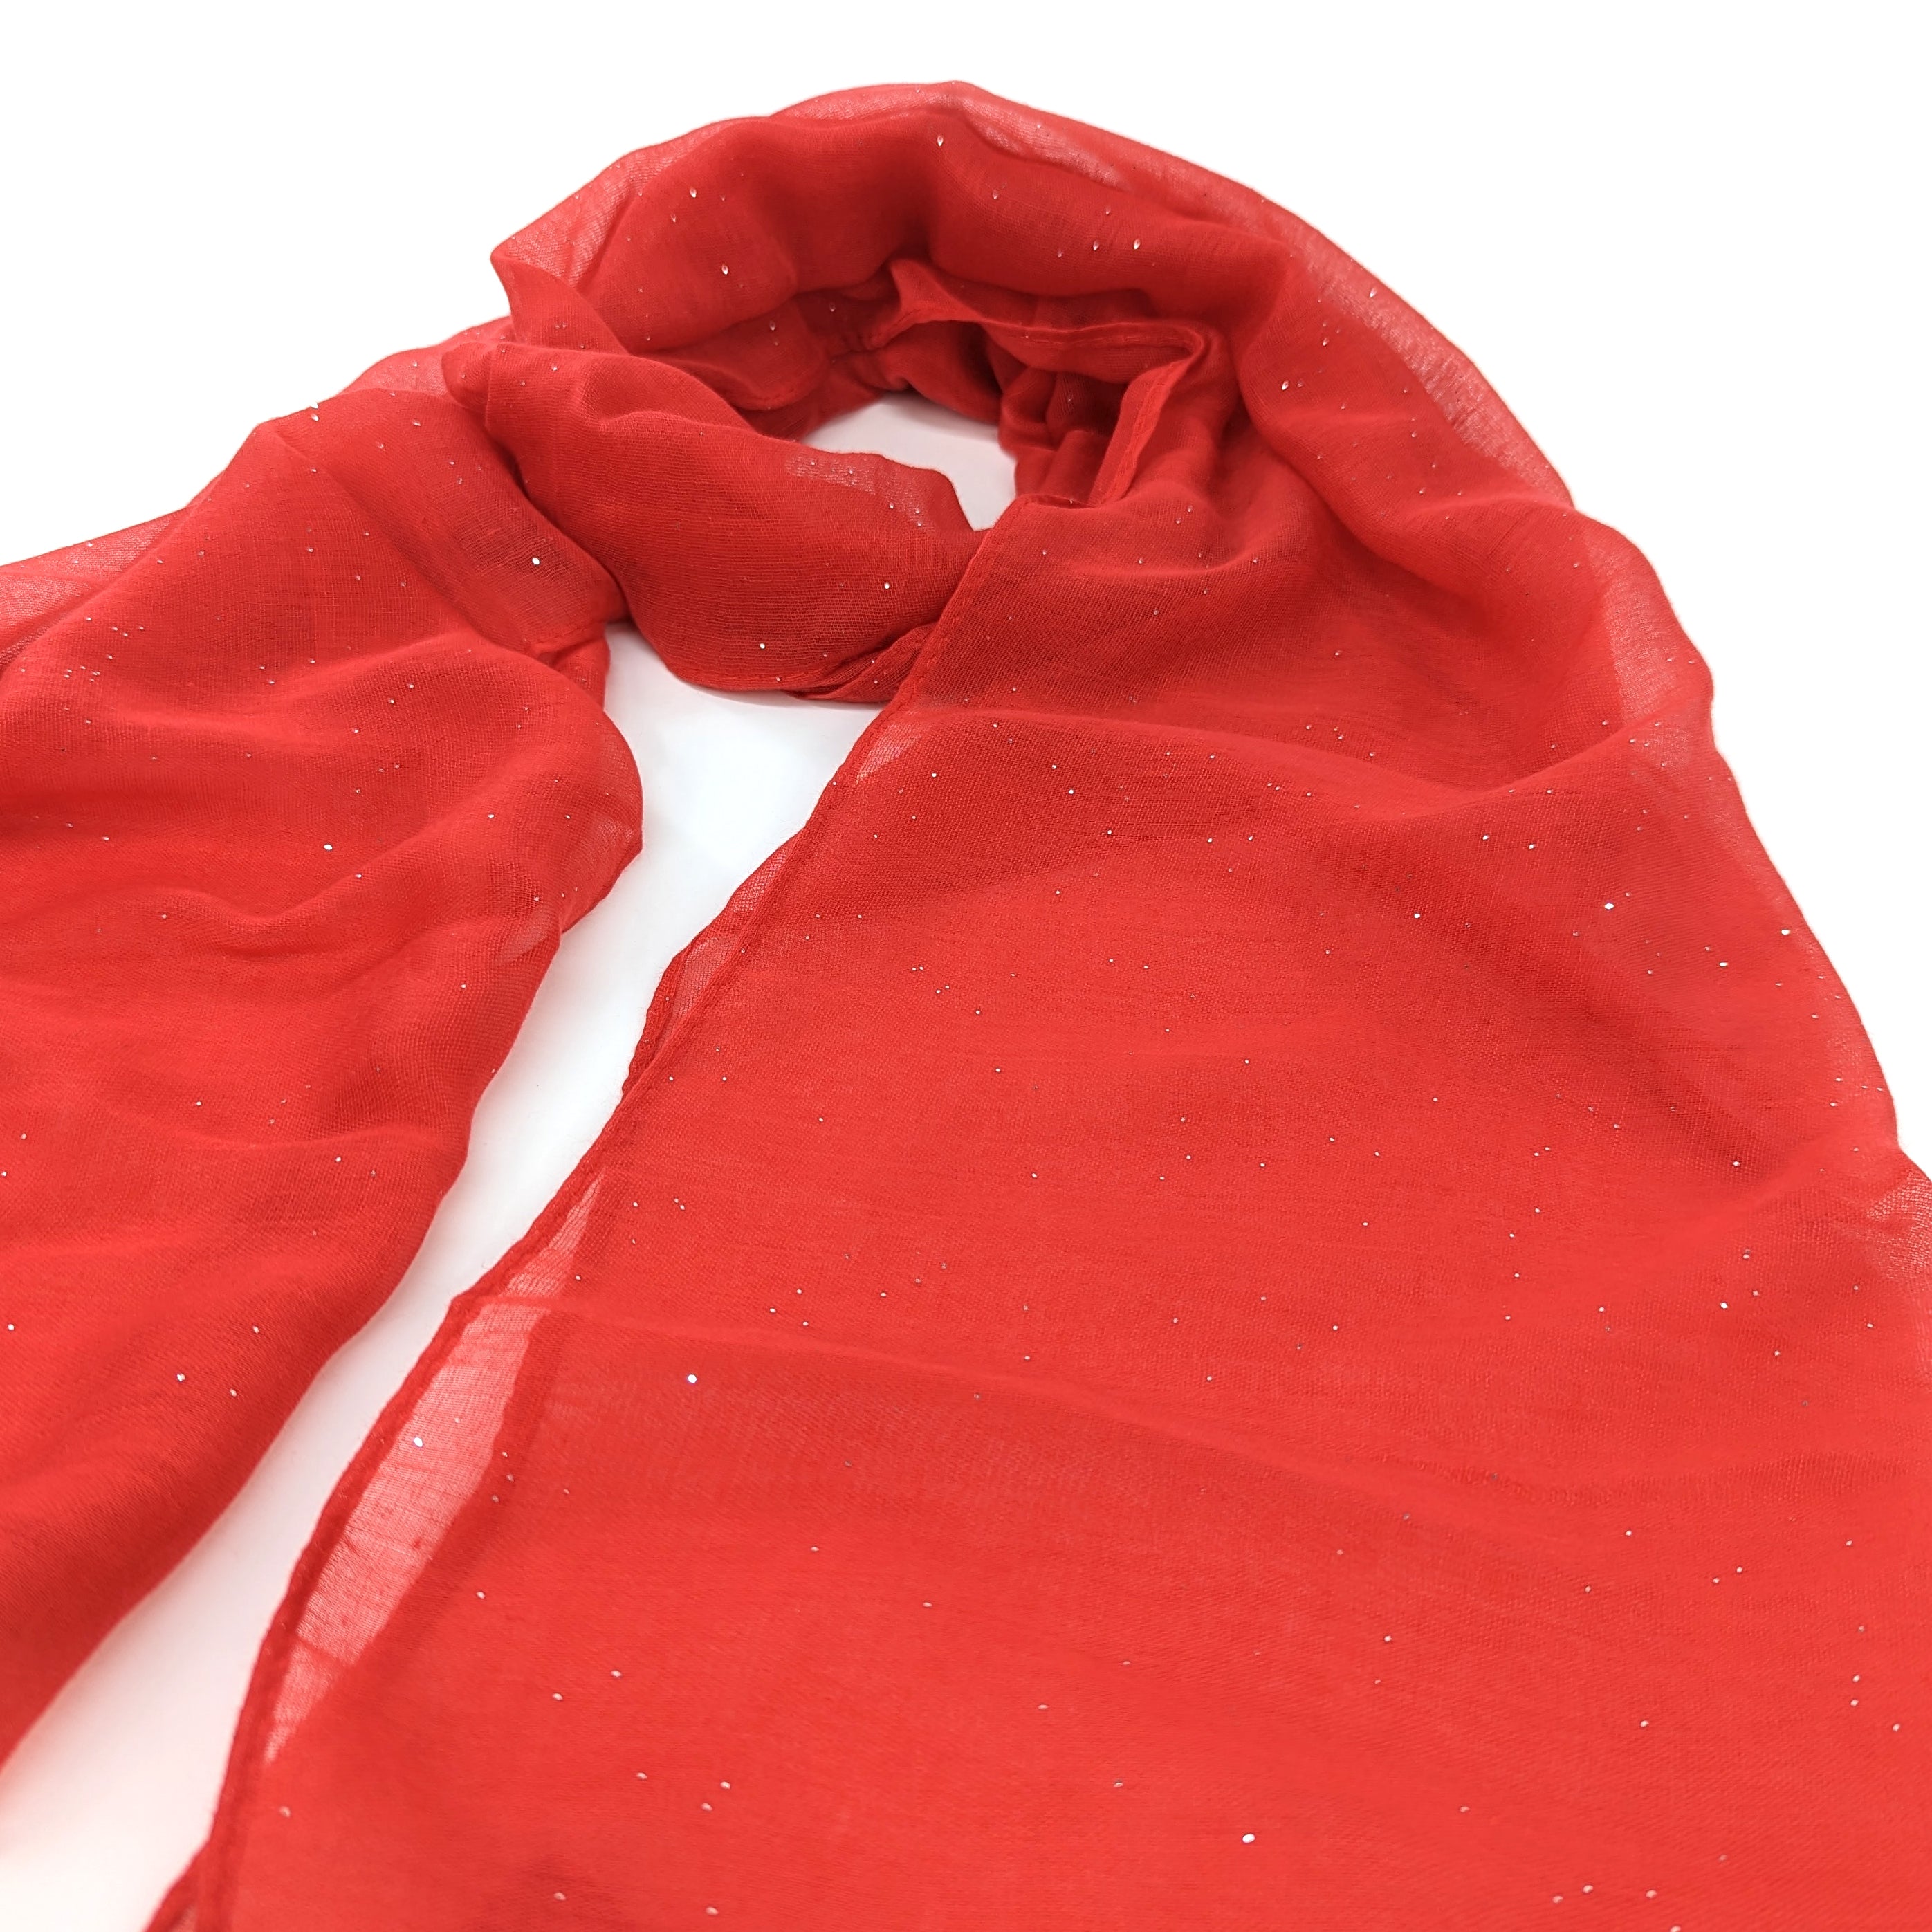 Viano - Sparkle Scarf - Crimson Red (50x180cm)